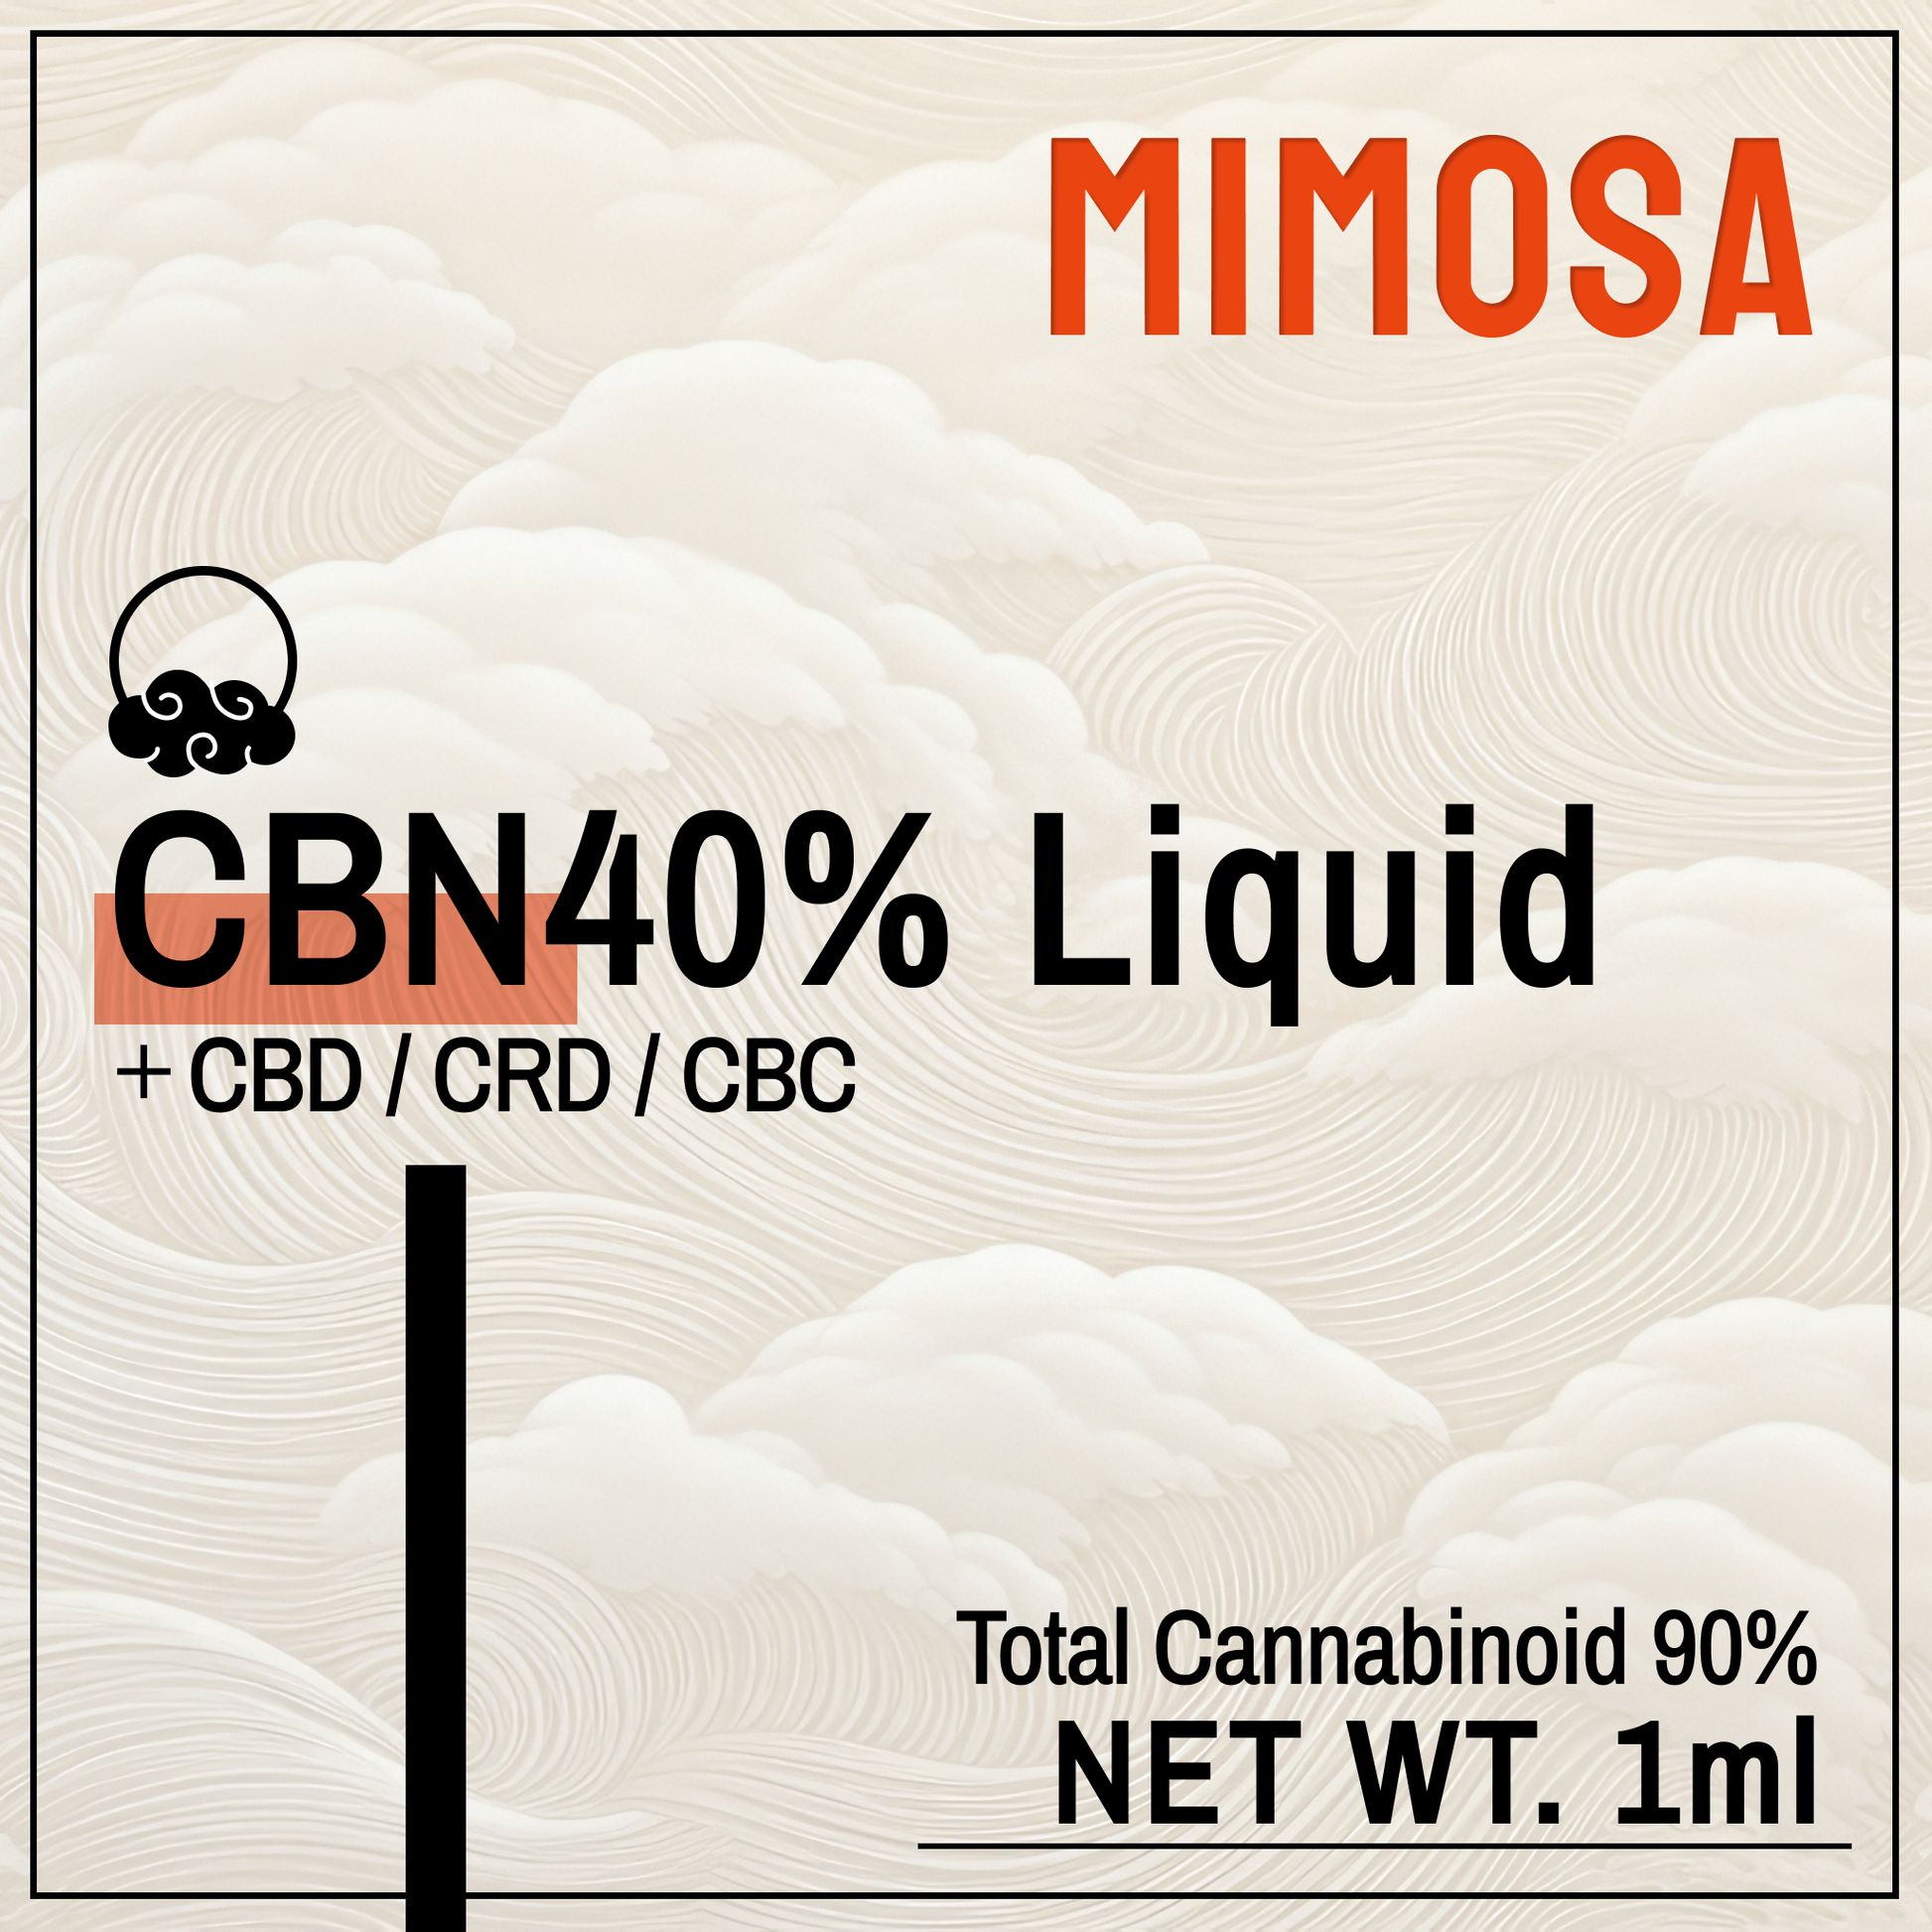 SAINT SMOKE】CBN優勢-510規格リキッド1.0ml / Mimosa